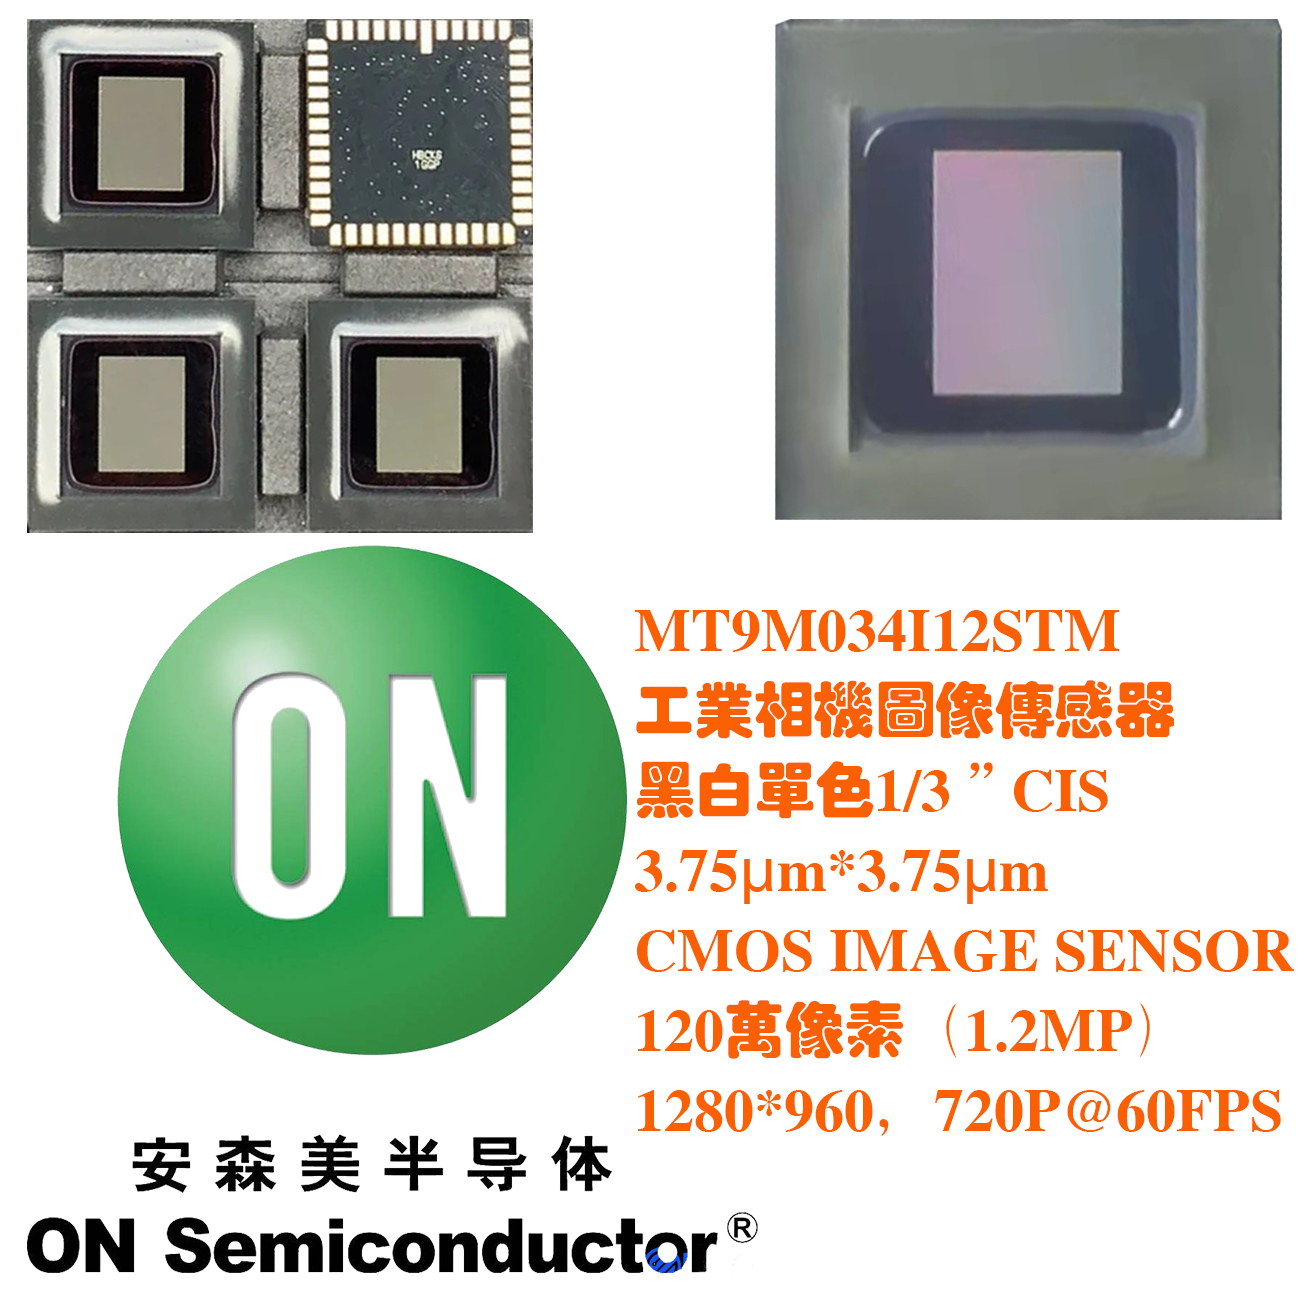 MT9M034I12STM, ONsemi Aptima Micron CMOS SENSOR,安森美镁光1.2MP IMAGE SENSOR, monothrome (B/W) CMOS image sensor, for industrial camera CMOS, 1/3-inch(英寸)黑白单色图像传感器，1280x960 HD 720p@60fps，工业相机感光芯片，安森美影像芯片